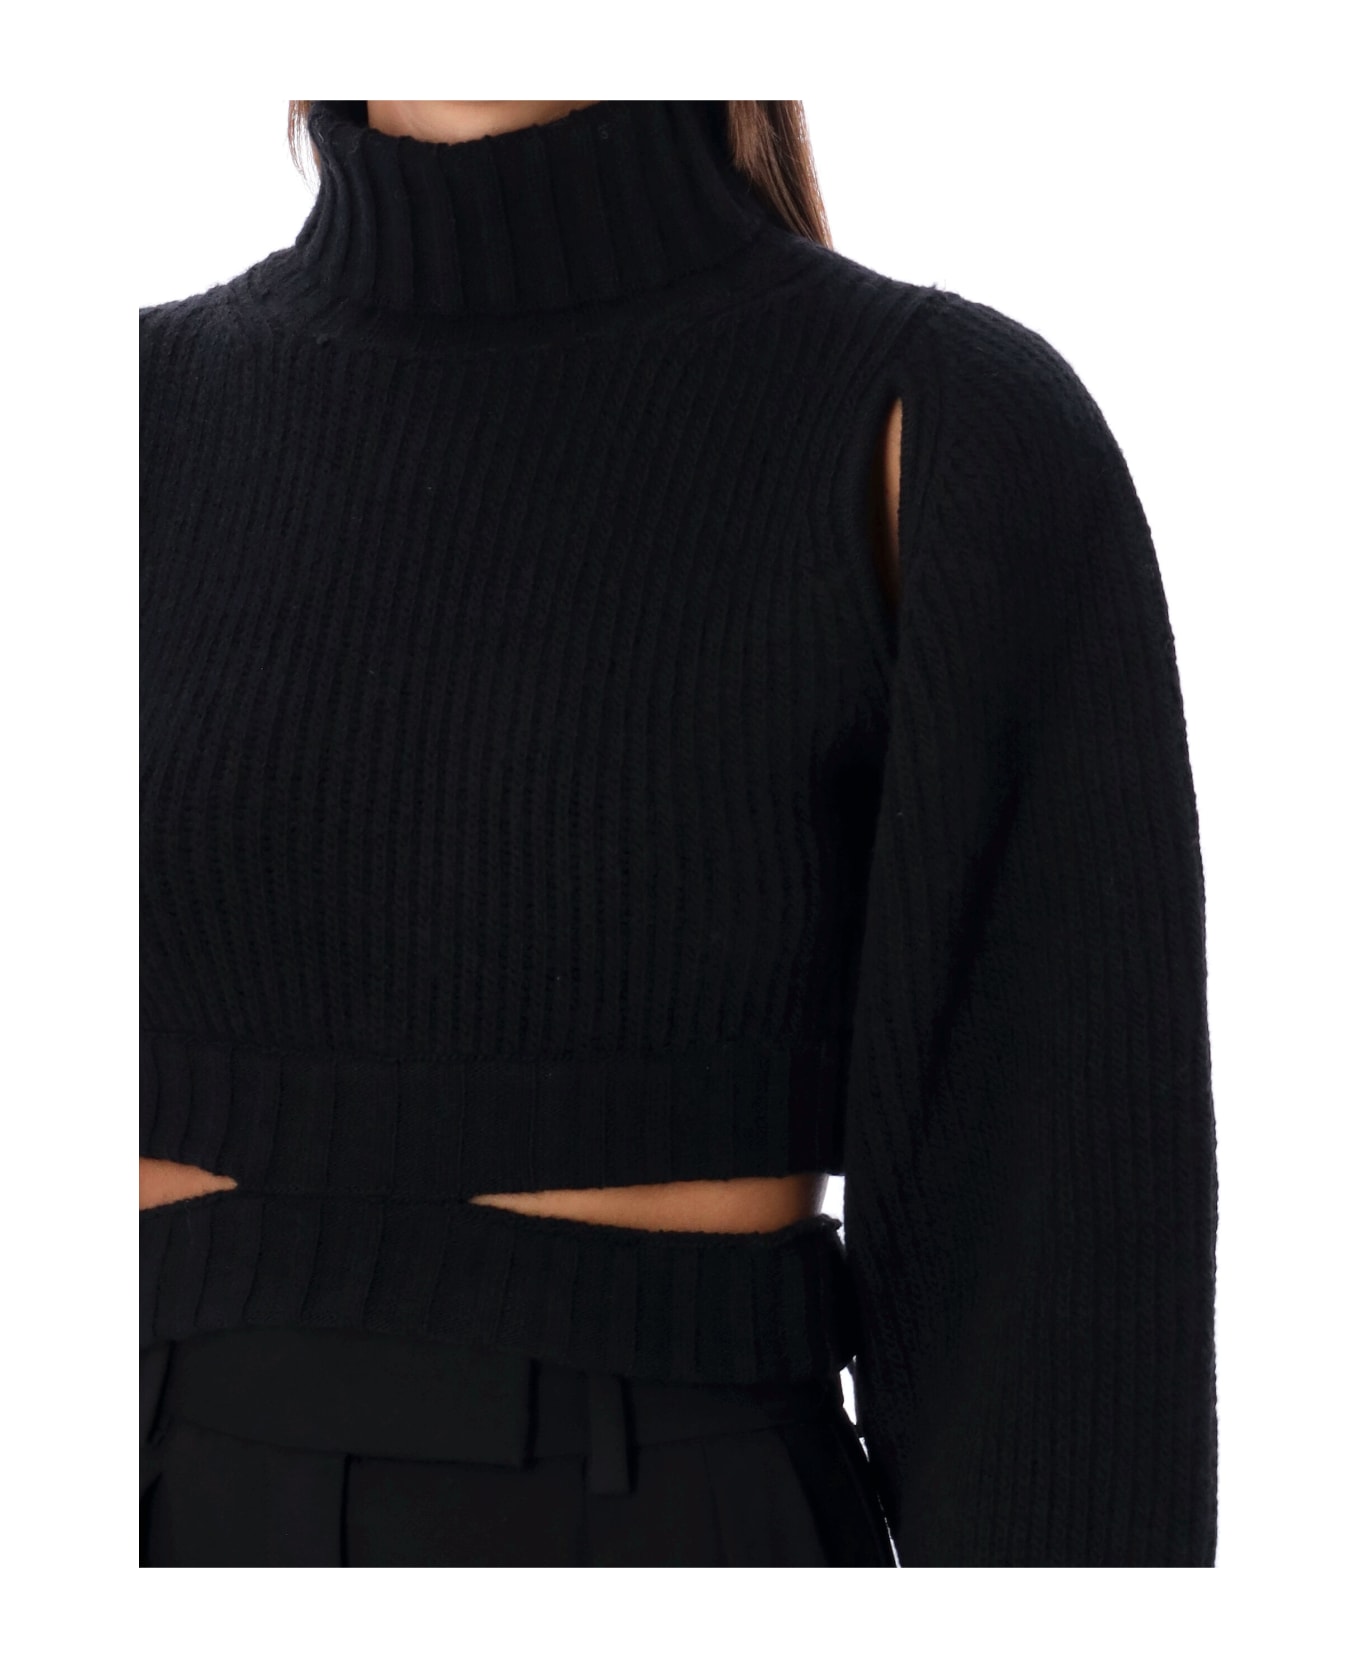 ANDREĀDAMO Cropped Knit Sweater - BLACK